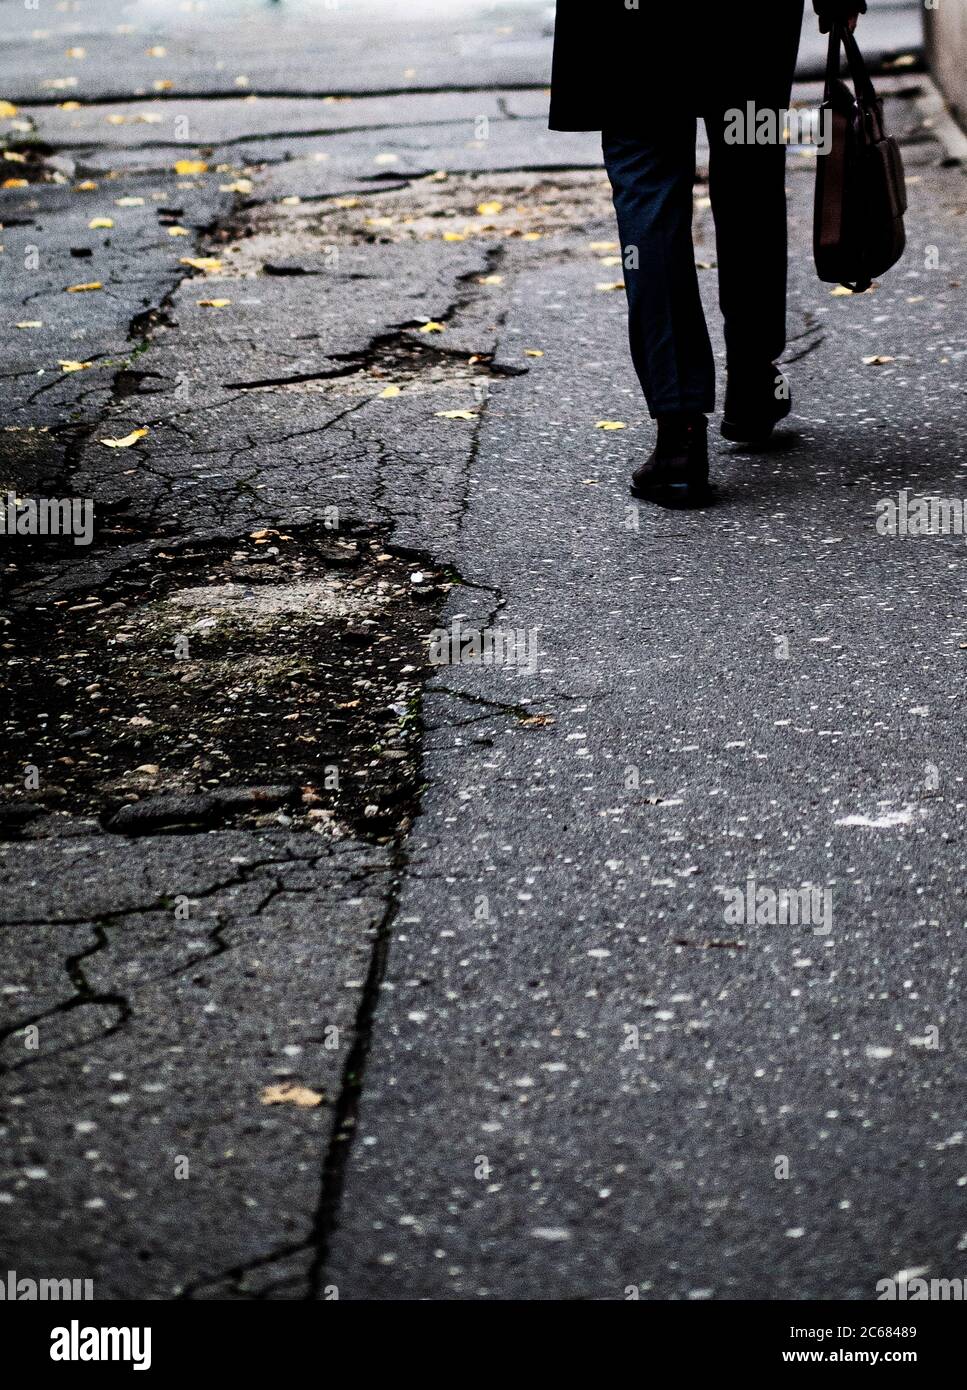 Man walking on sidewalk carrying a bag Stock Photo